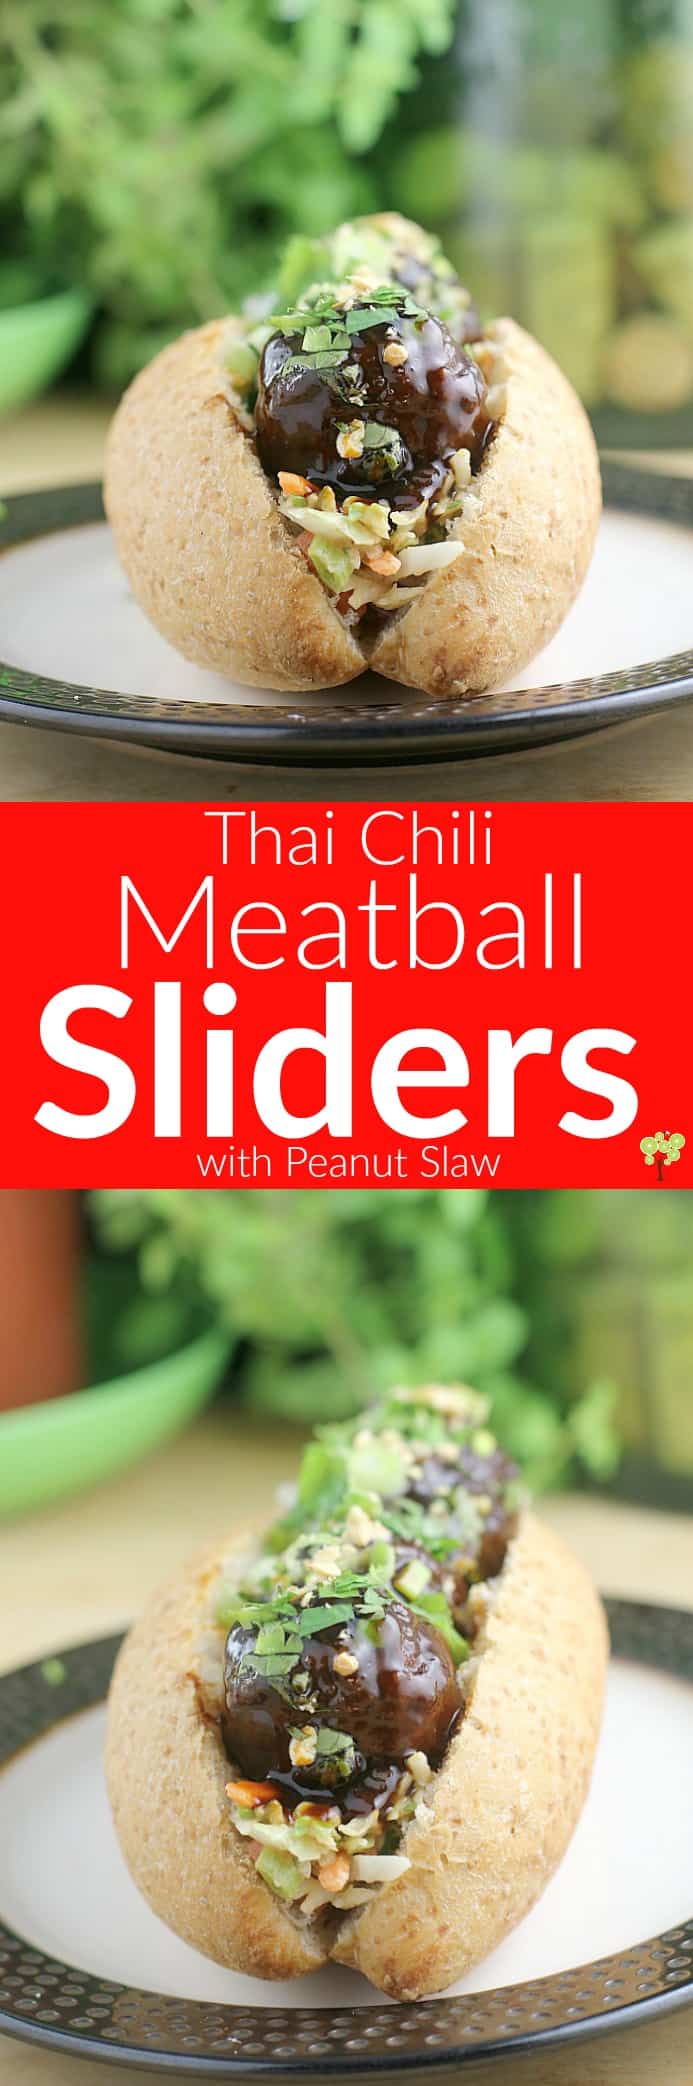 Thai Chili Meatball Sliders with Peanut Slaw http://wp.me/p4qC4h-3Di